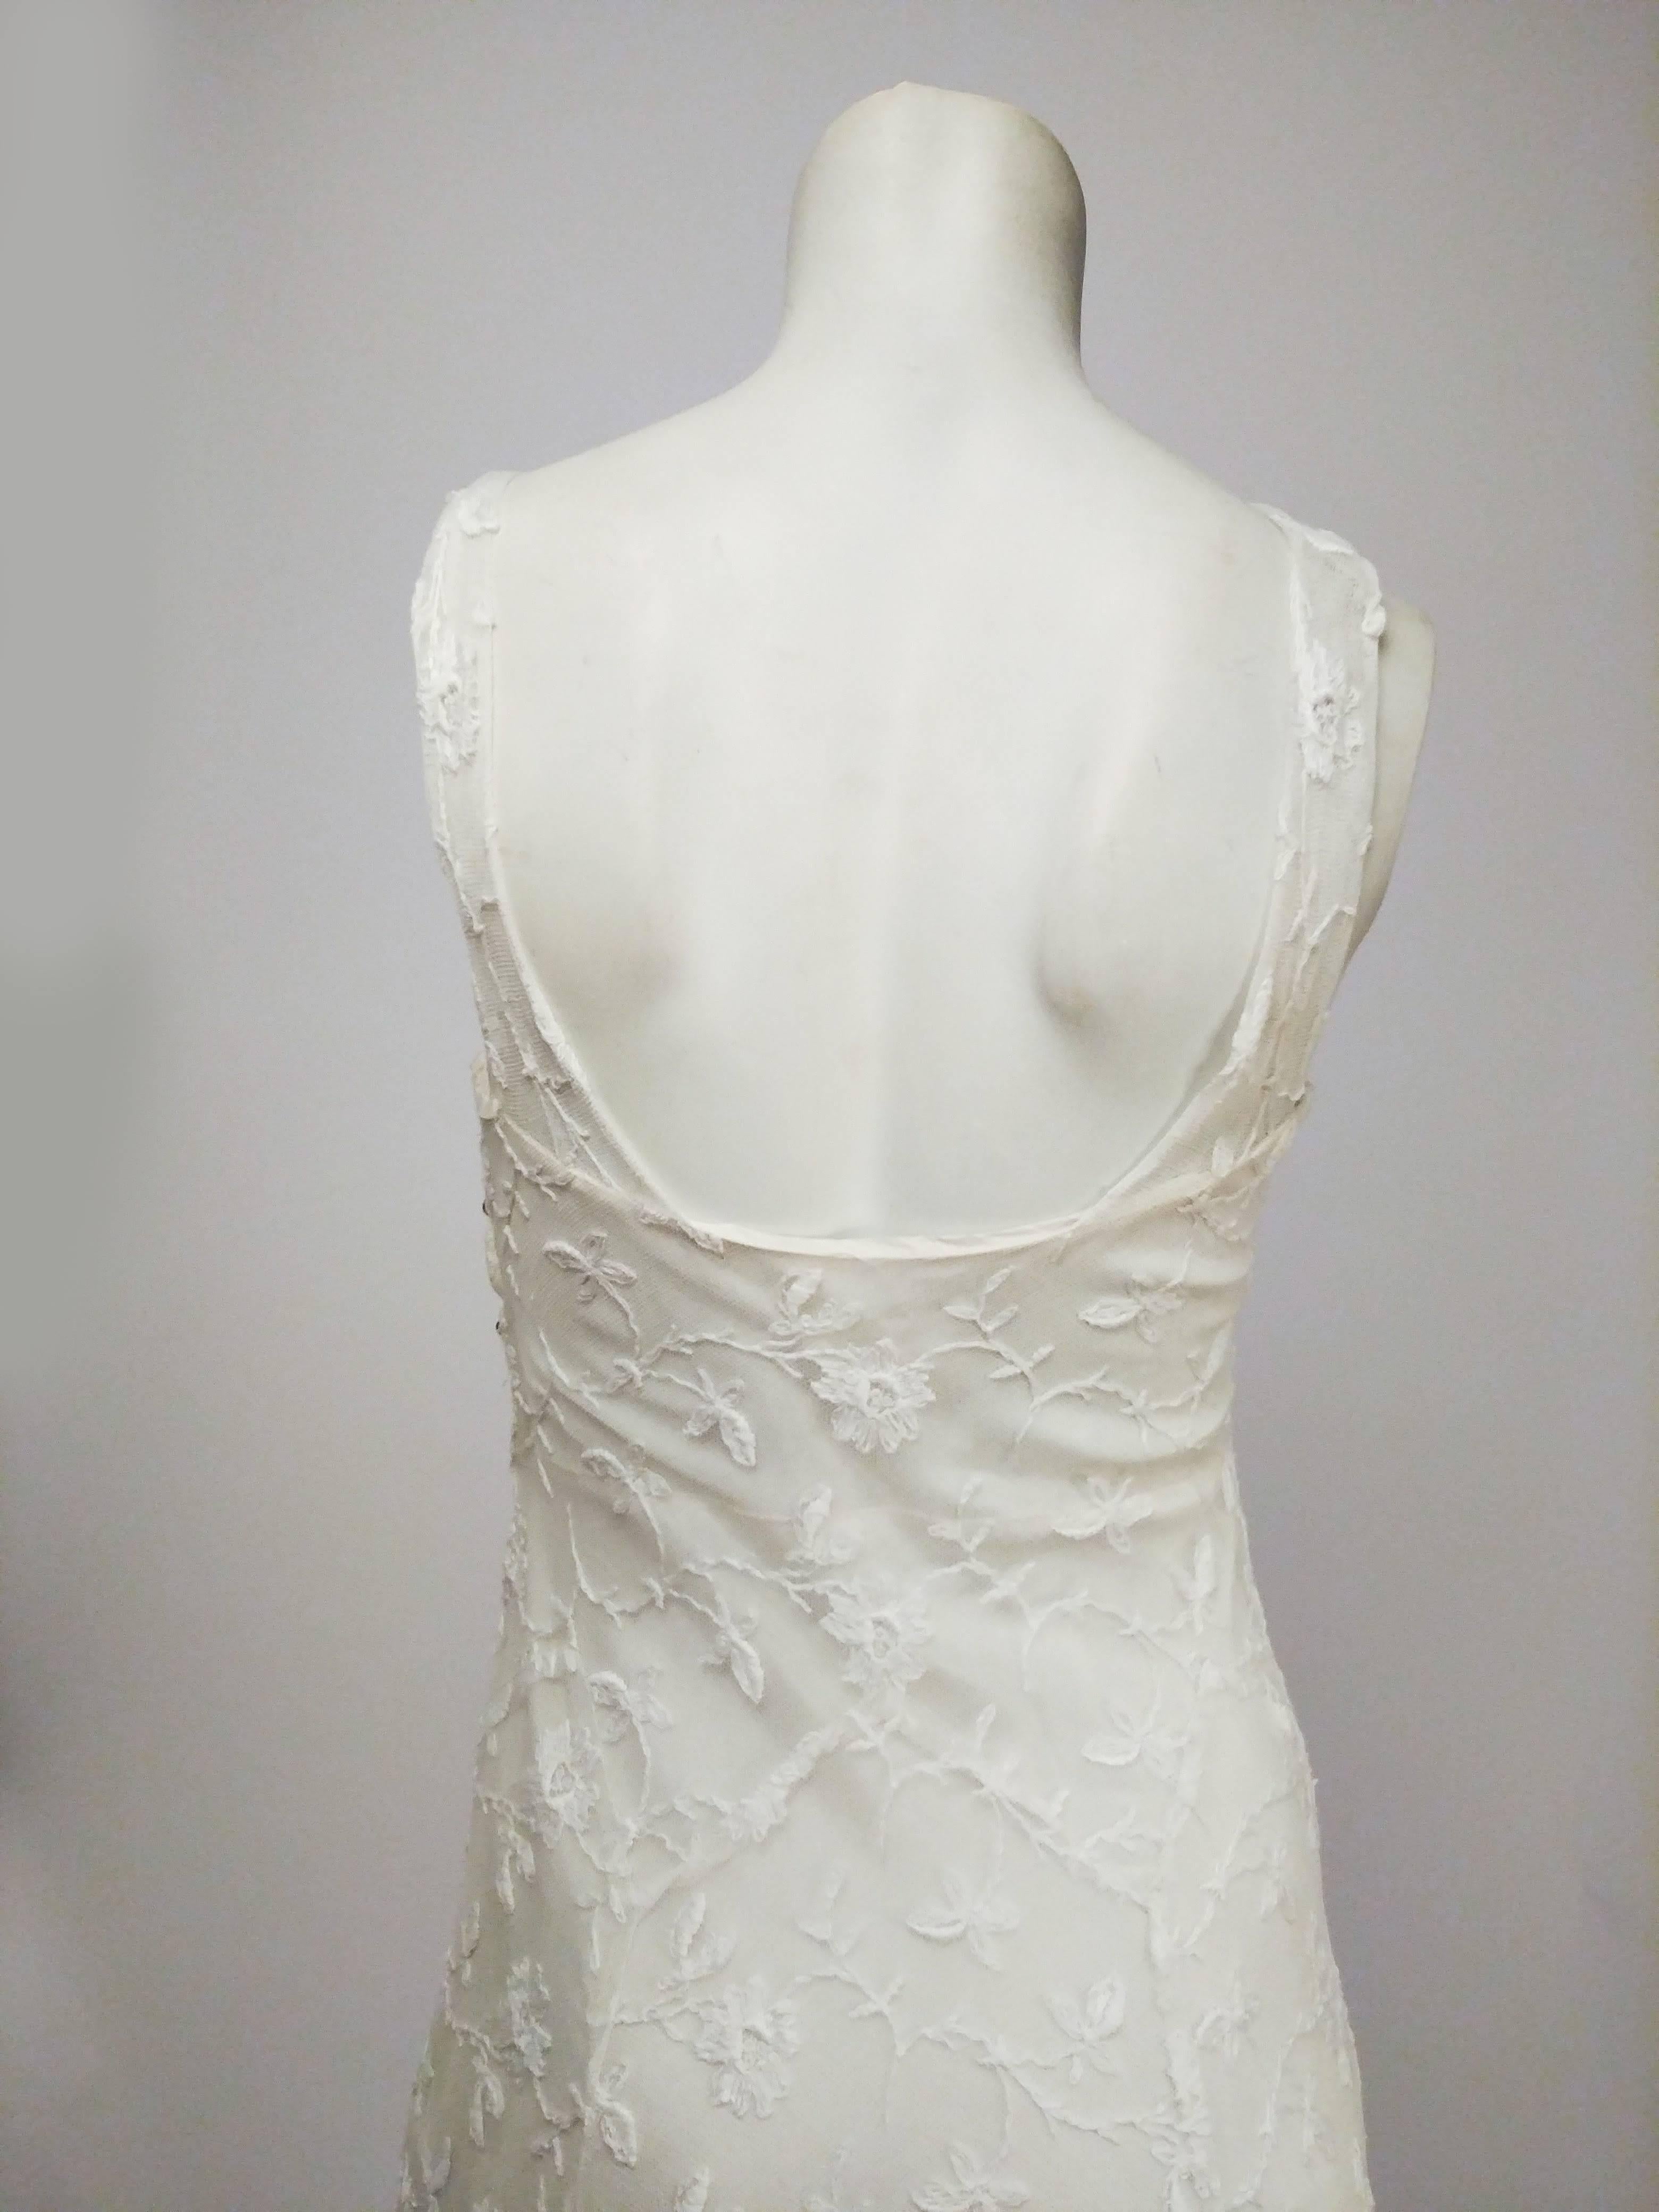 Women's 1930s White Lace Wedding Dress